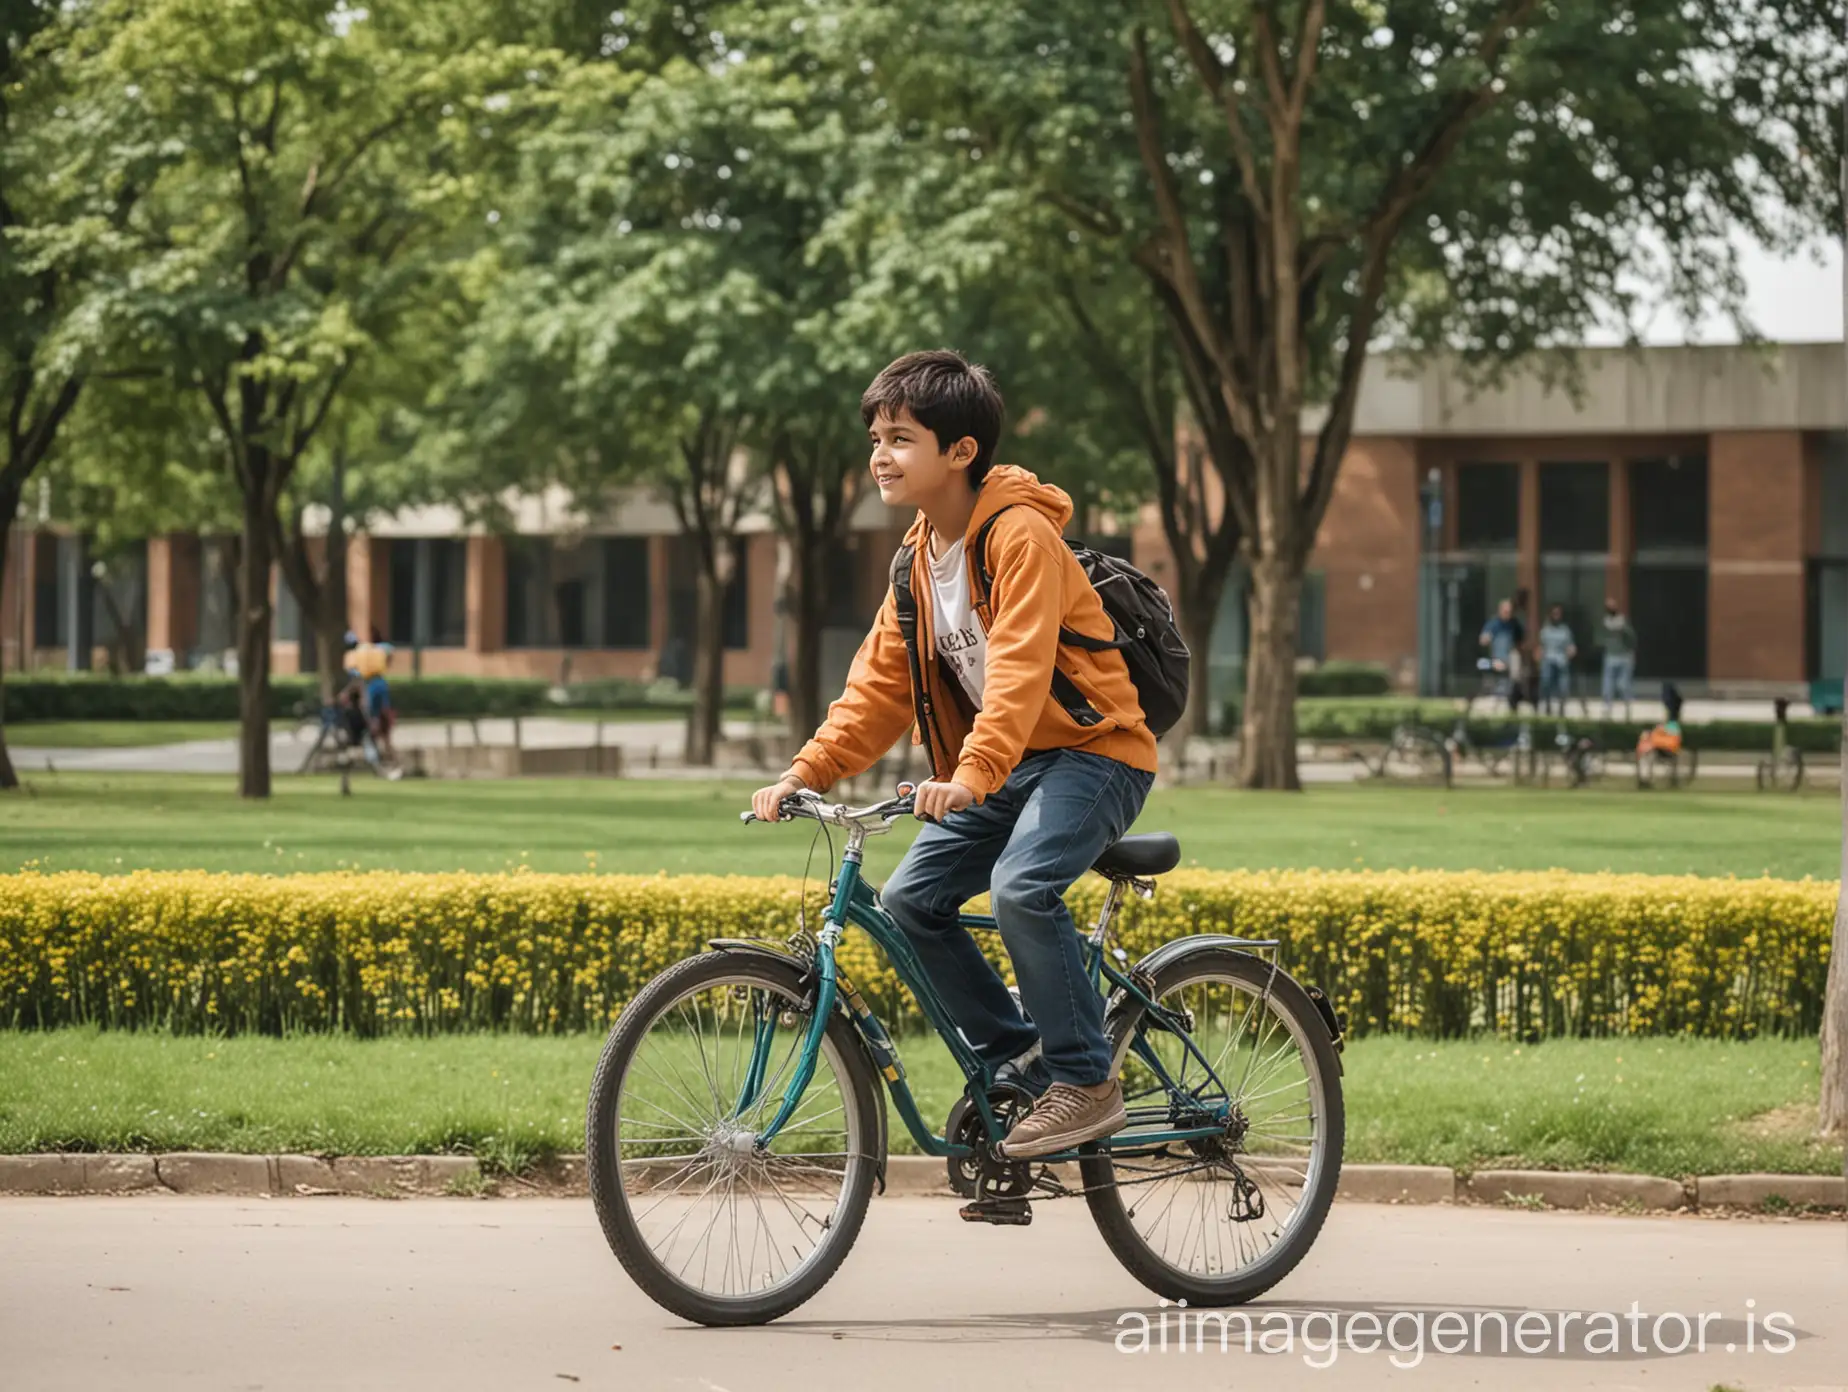 Young-Boy-Riding-Bicycle-Through-Campus-Park